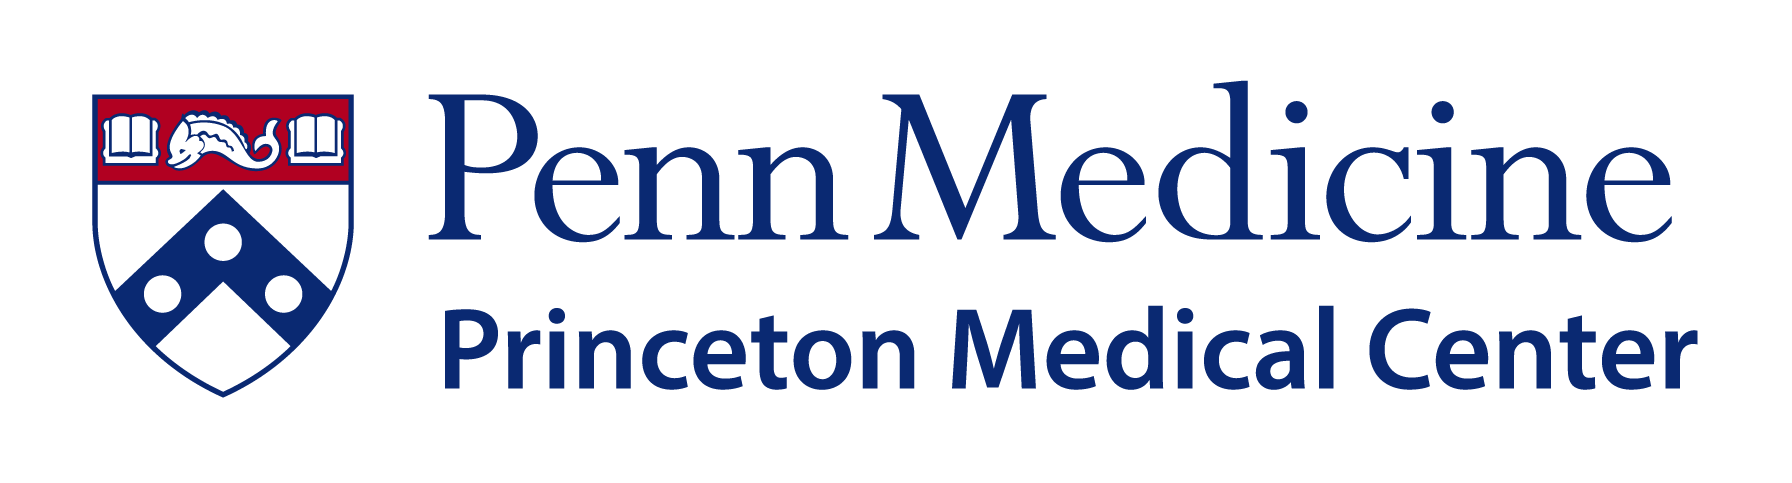 Penn Medicine Princeton Hospital